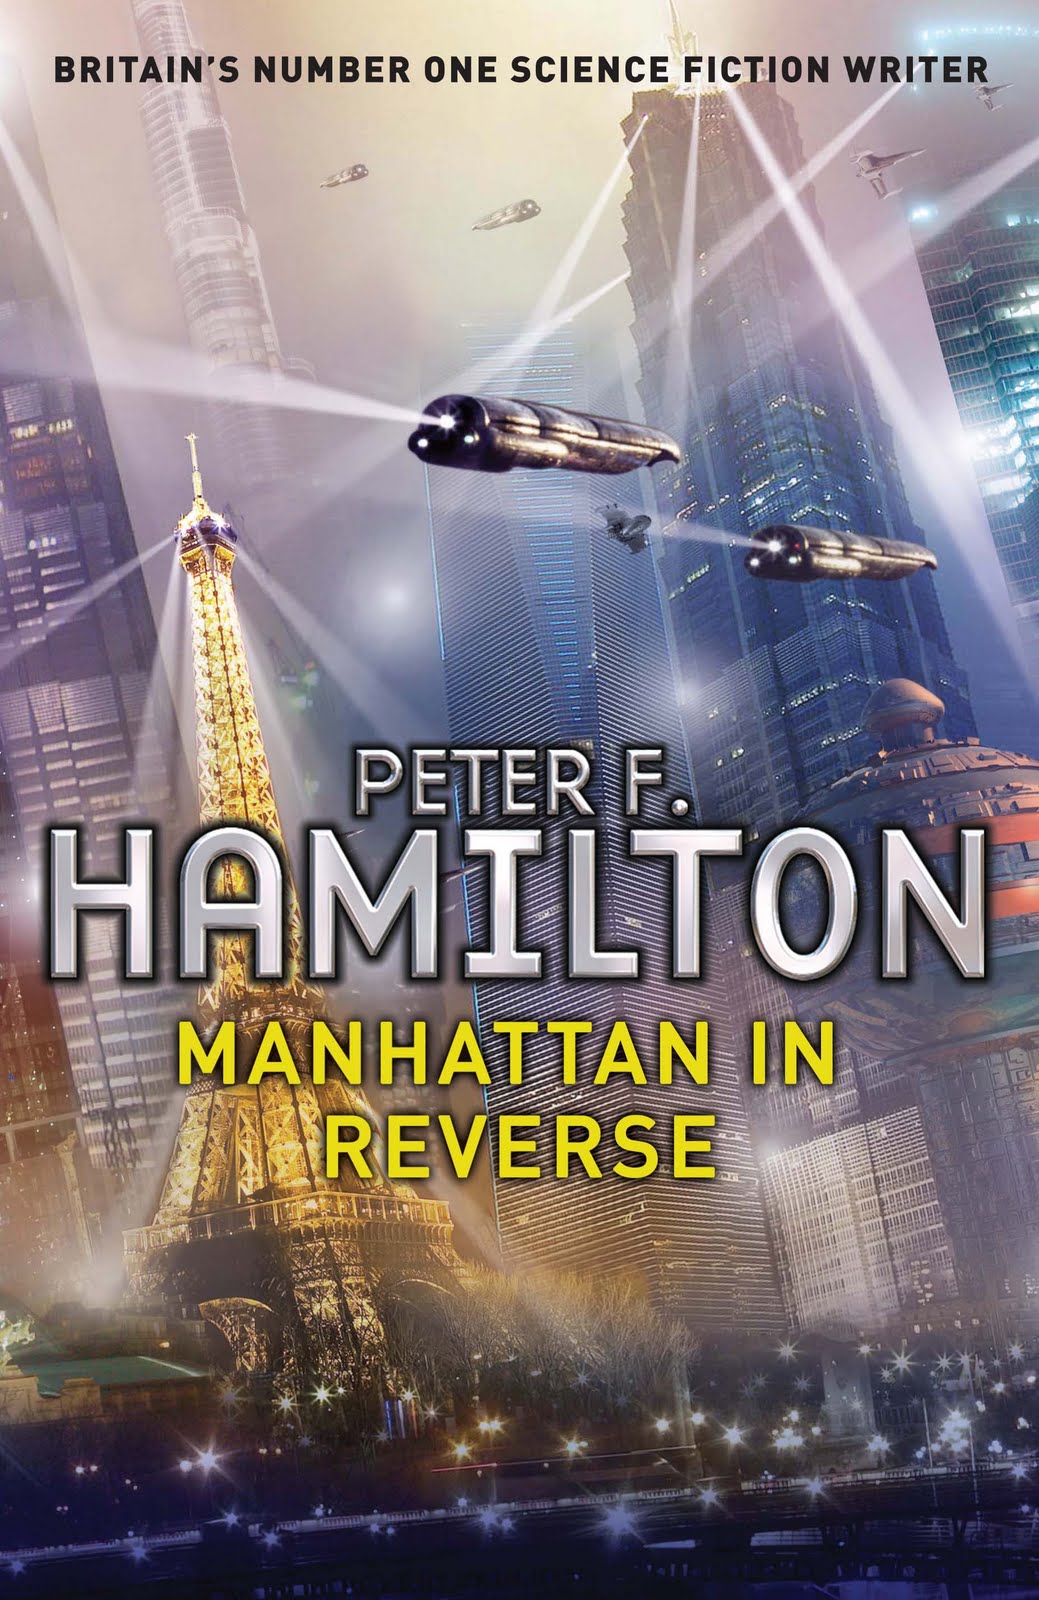 Peter F. Hamilton: Manhattan in reverse (2011, Pan Macmillan)